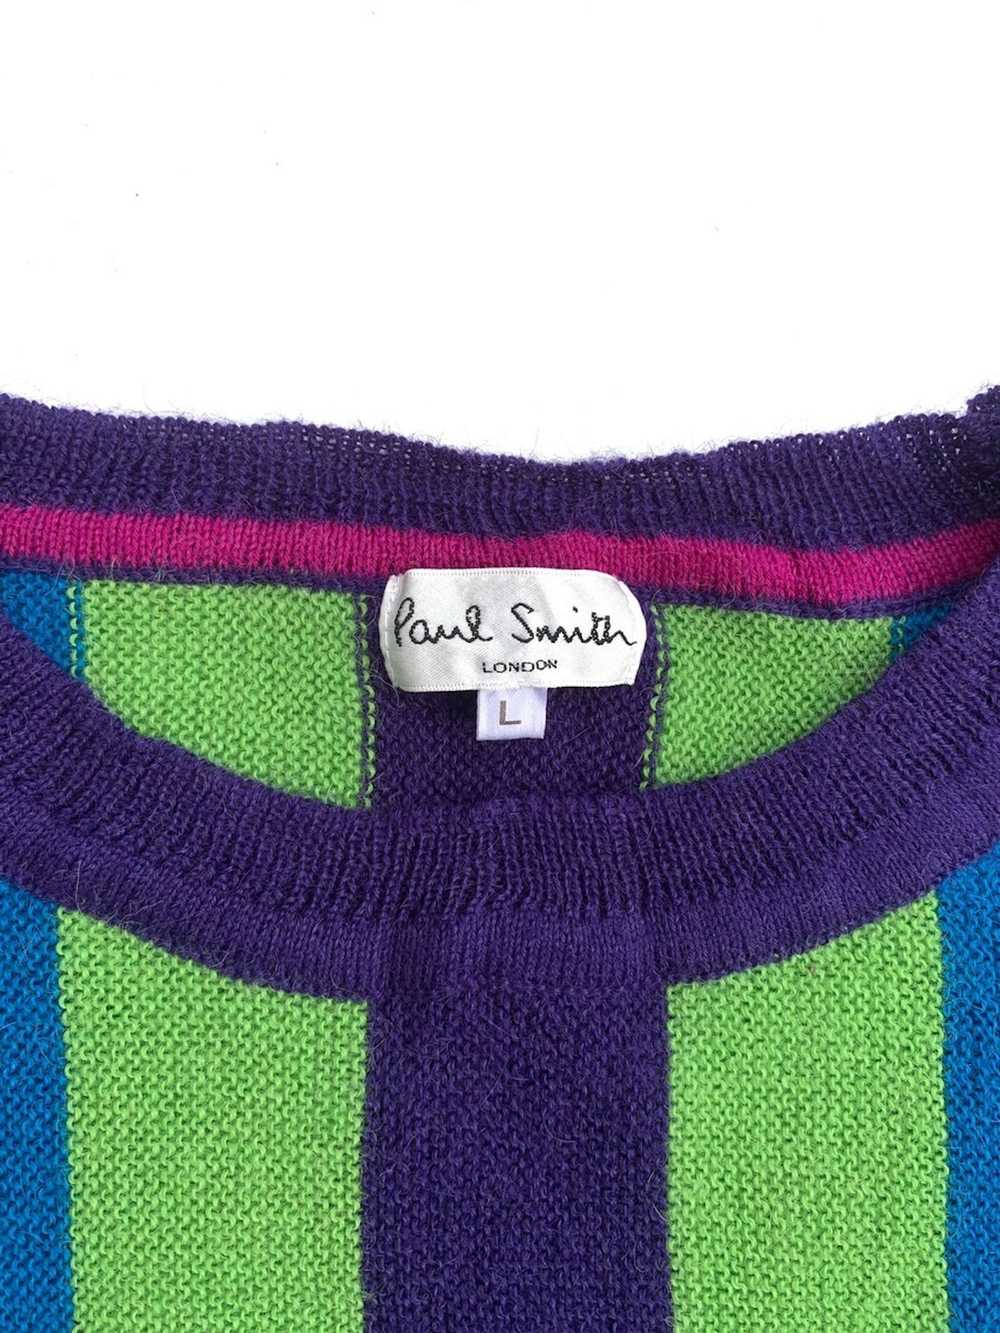 Paul Smith 🔥Vintage Paul Smith London Knit Sweat… - image 4